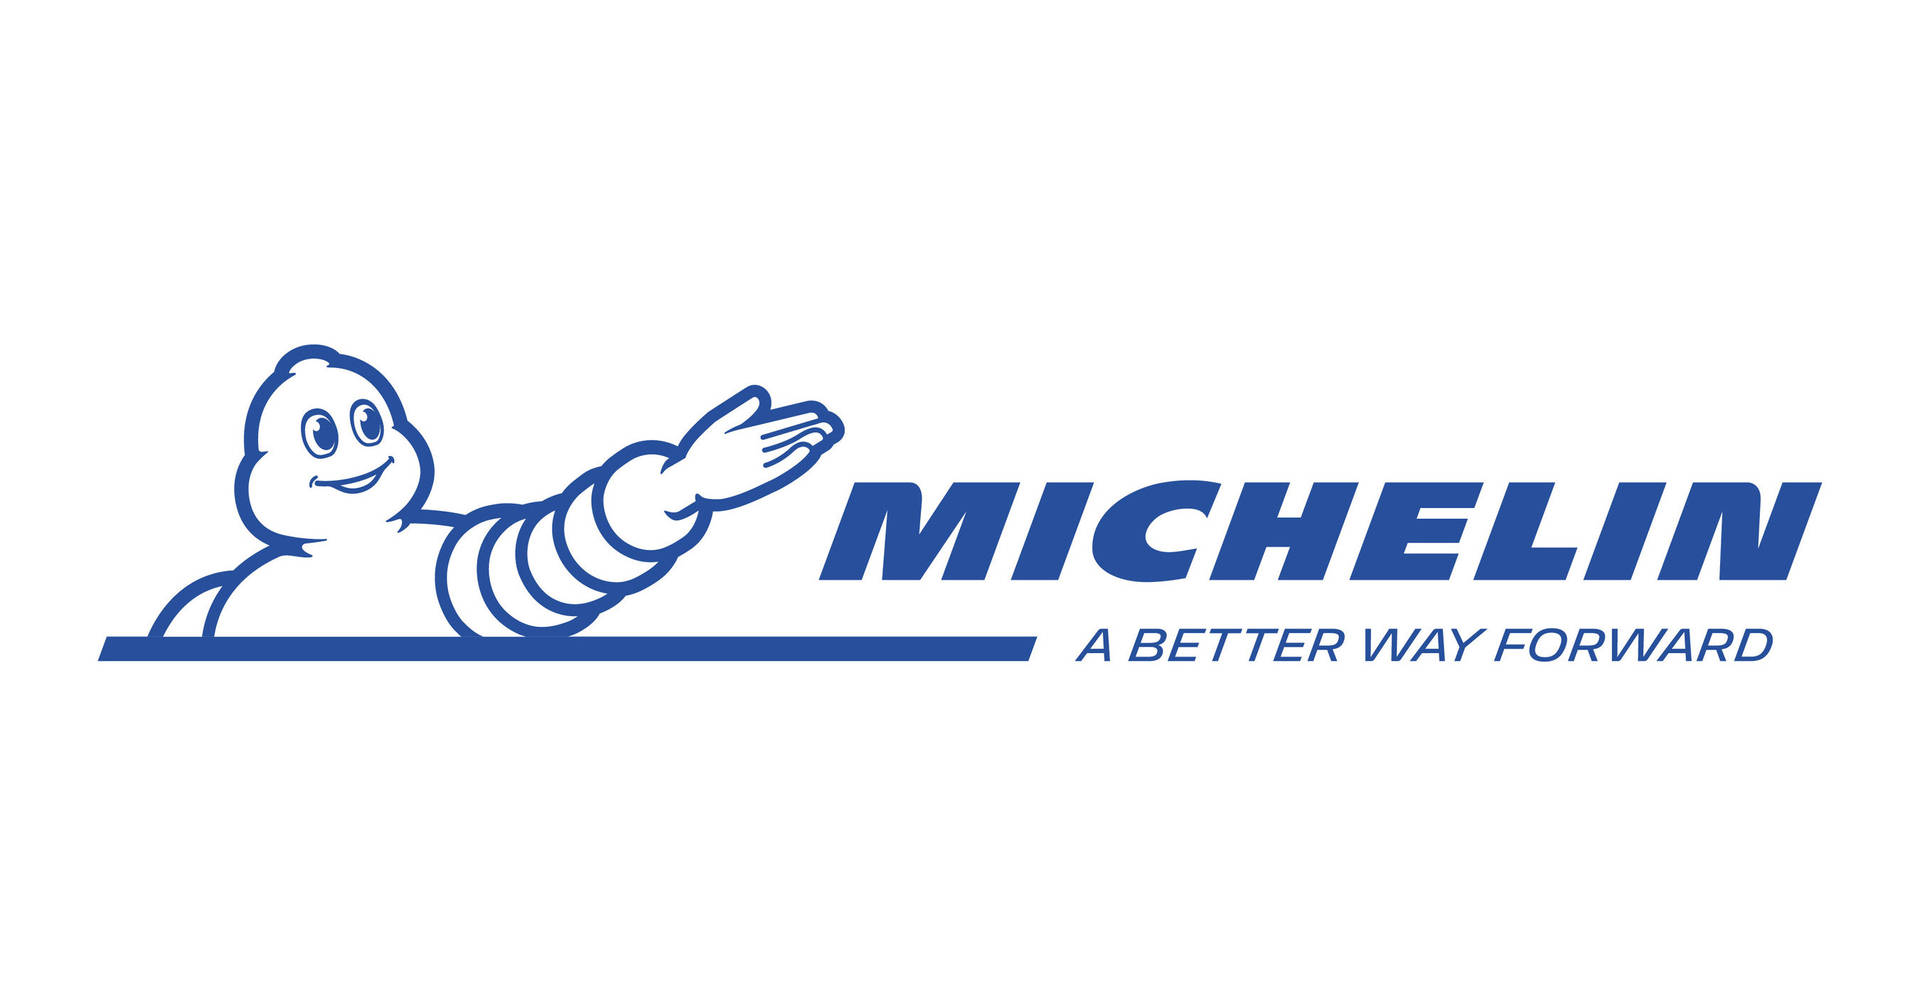 Michelin 2700 X 1414 Wallpaper